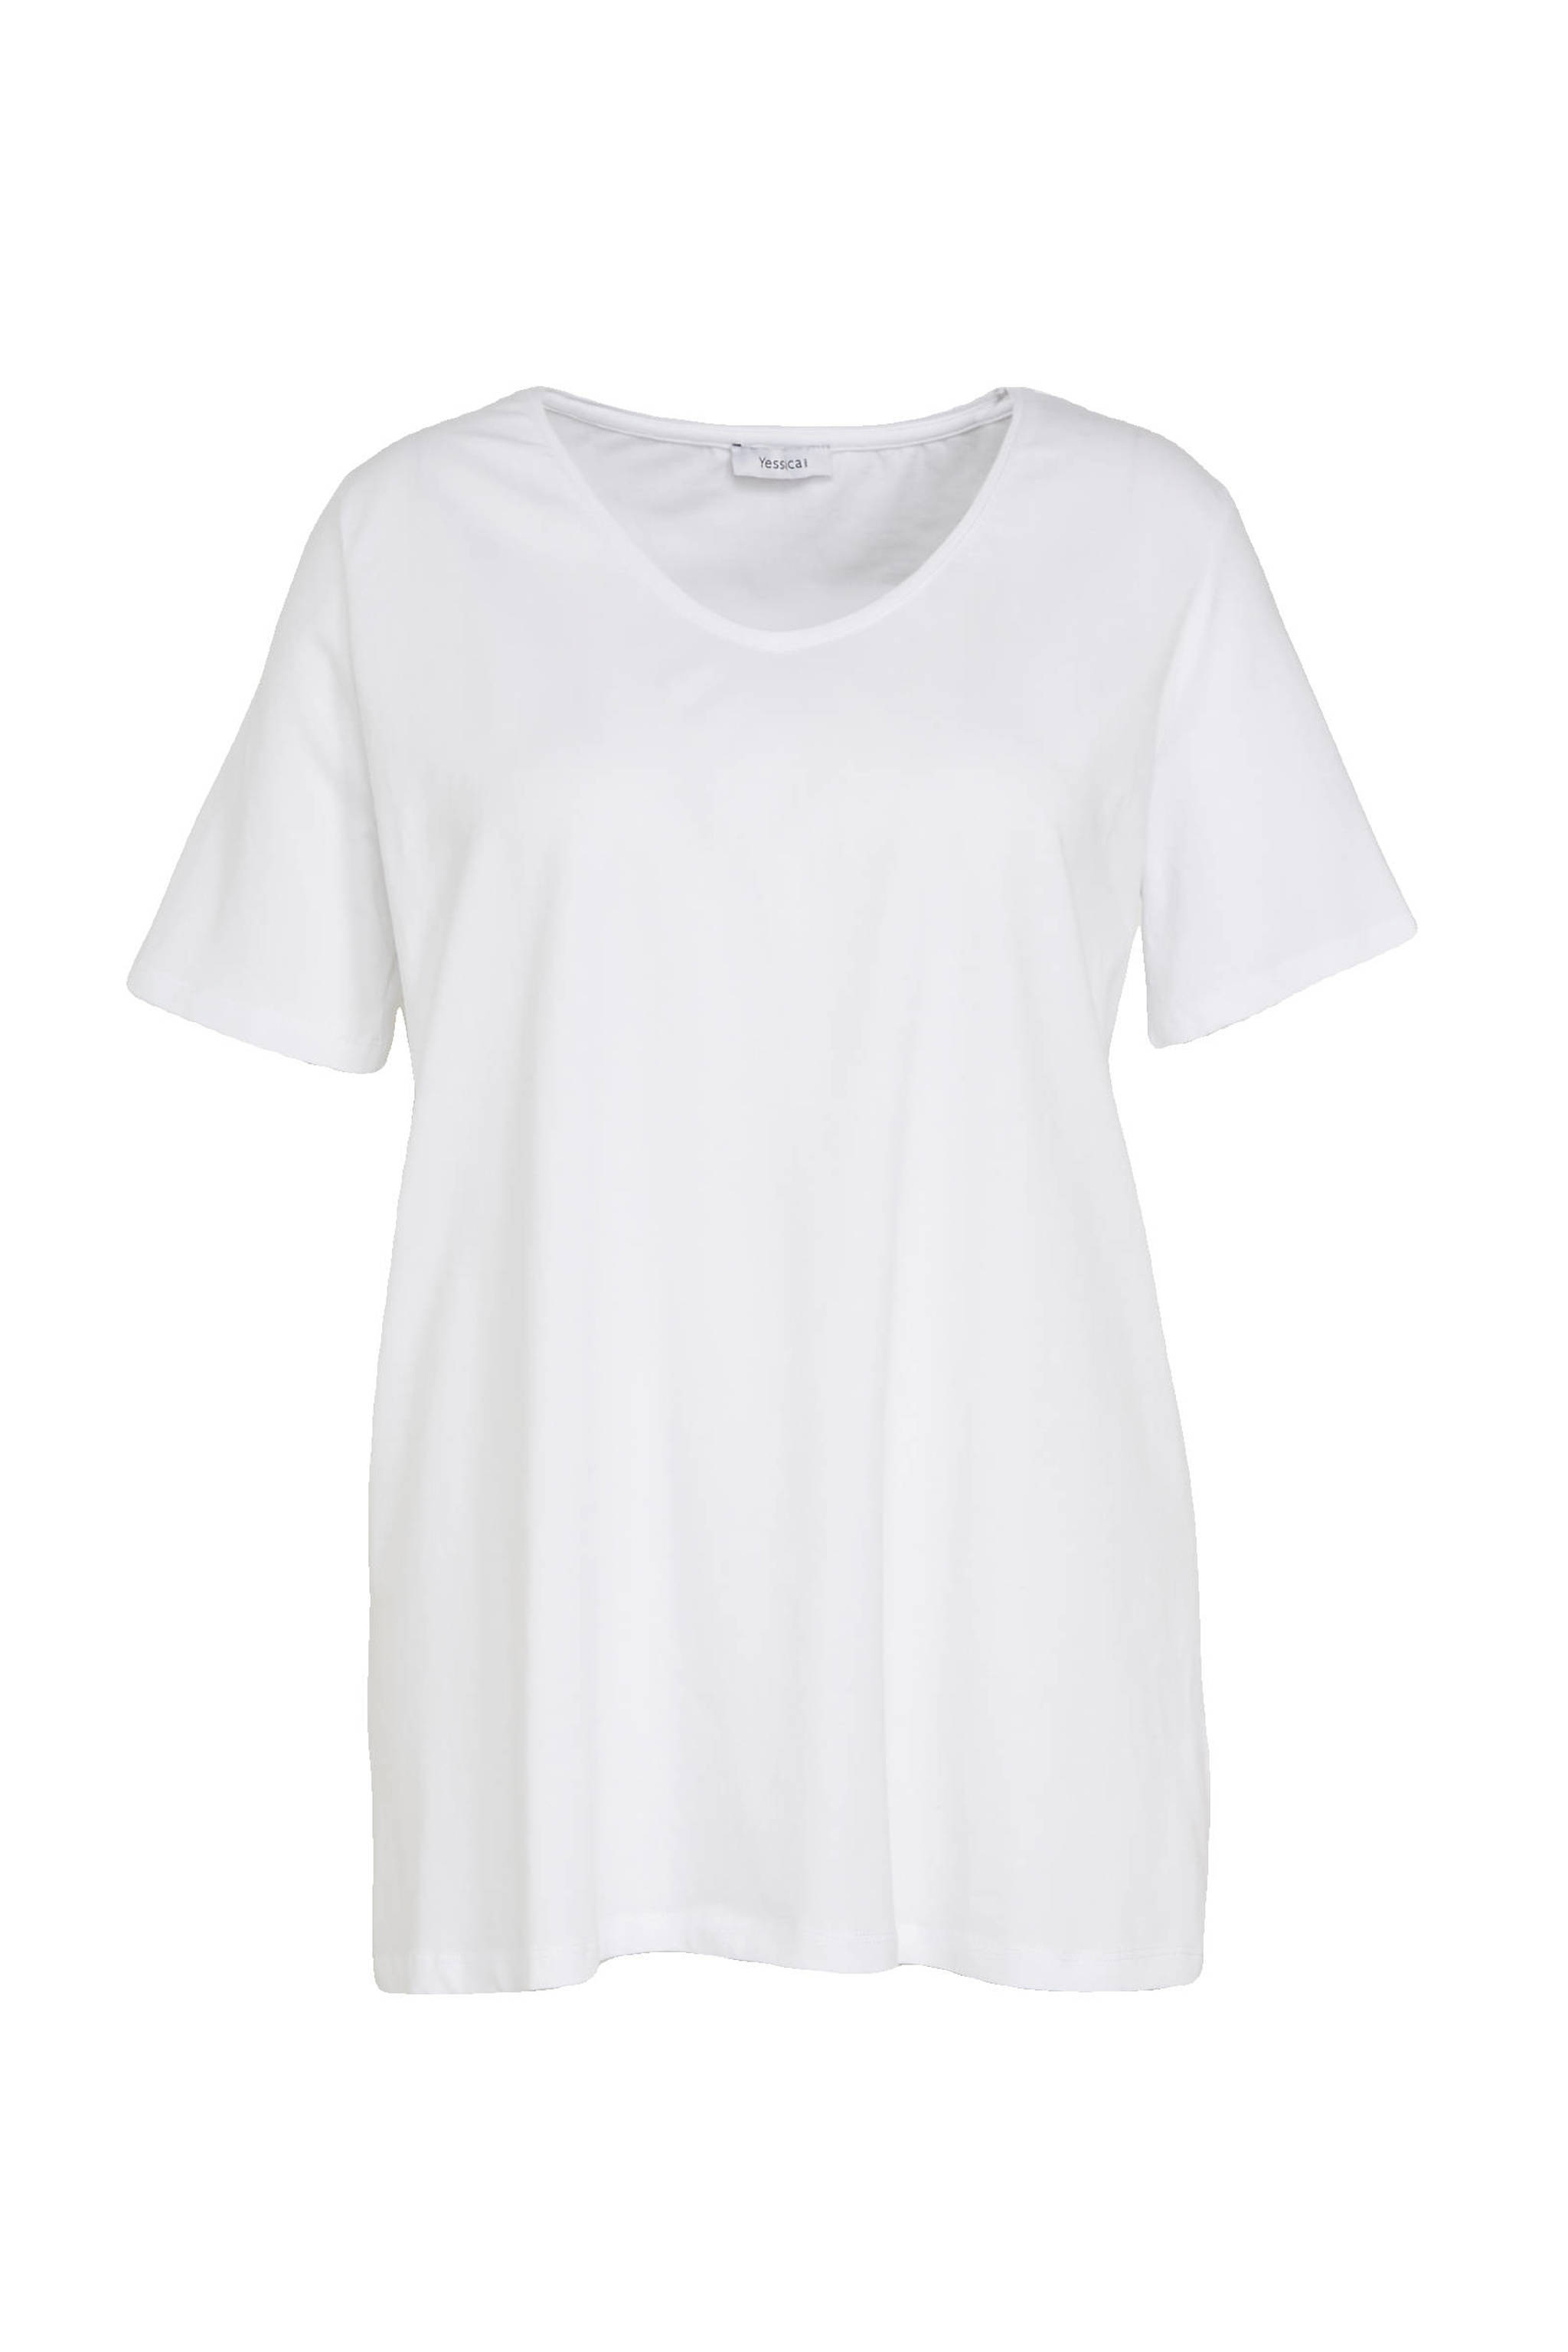 Treble burgemeester Belonend C&A XL Yessica basic T-shirt wit set van 2 | wehkamp